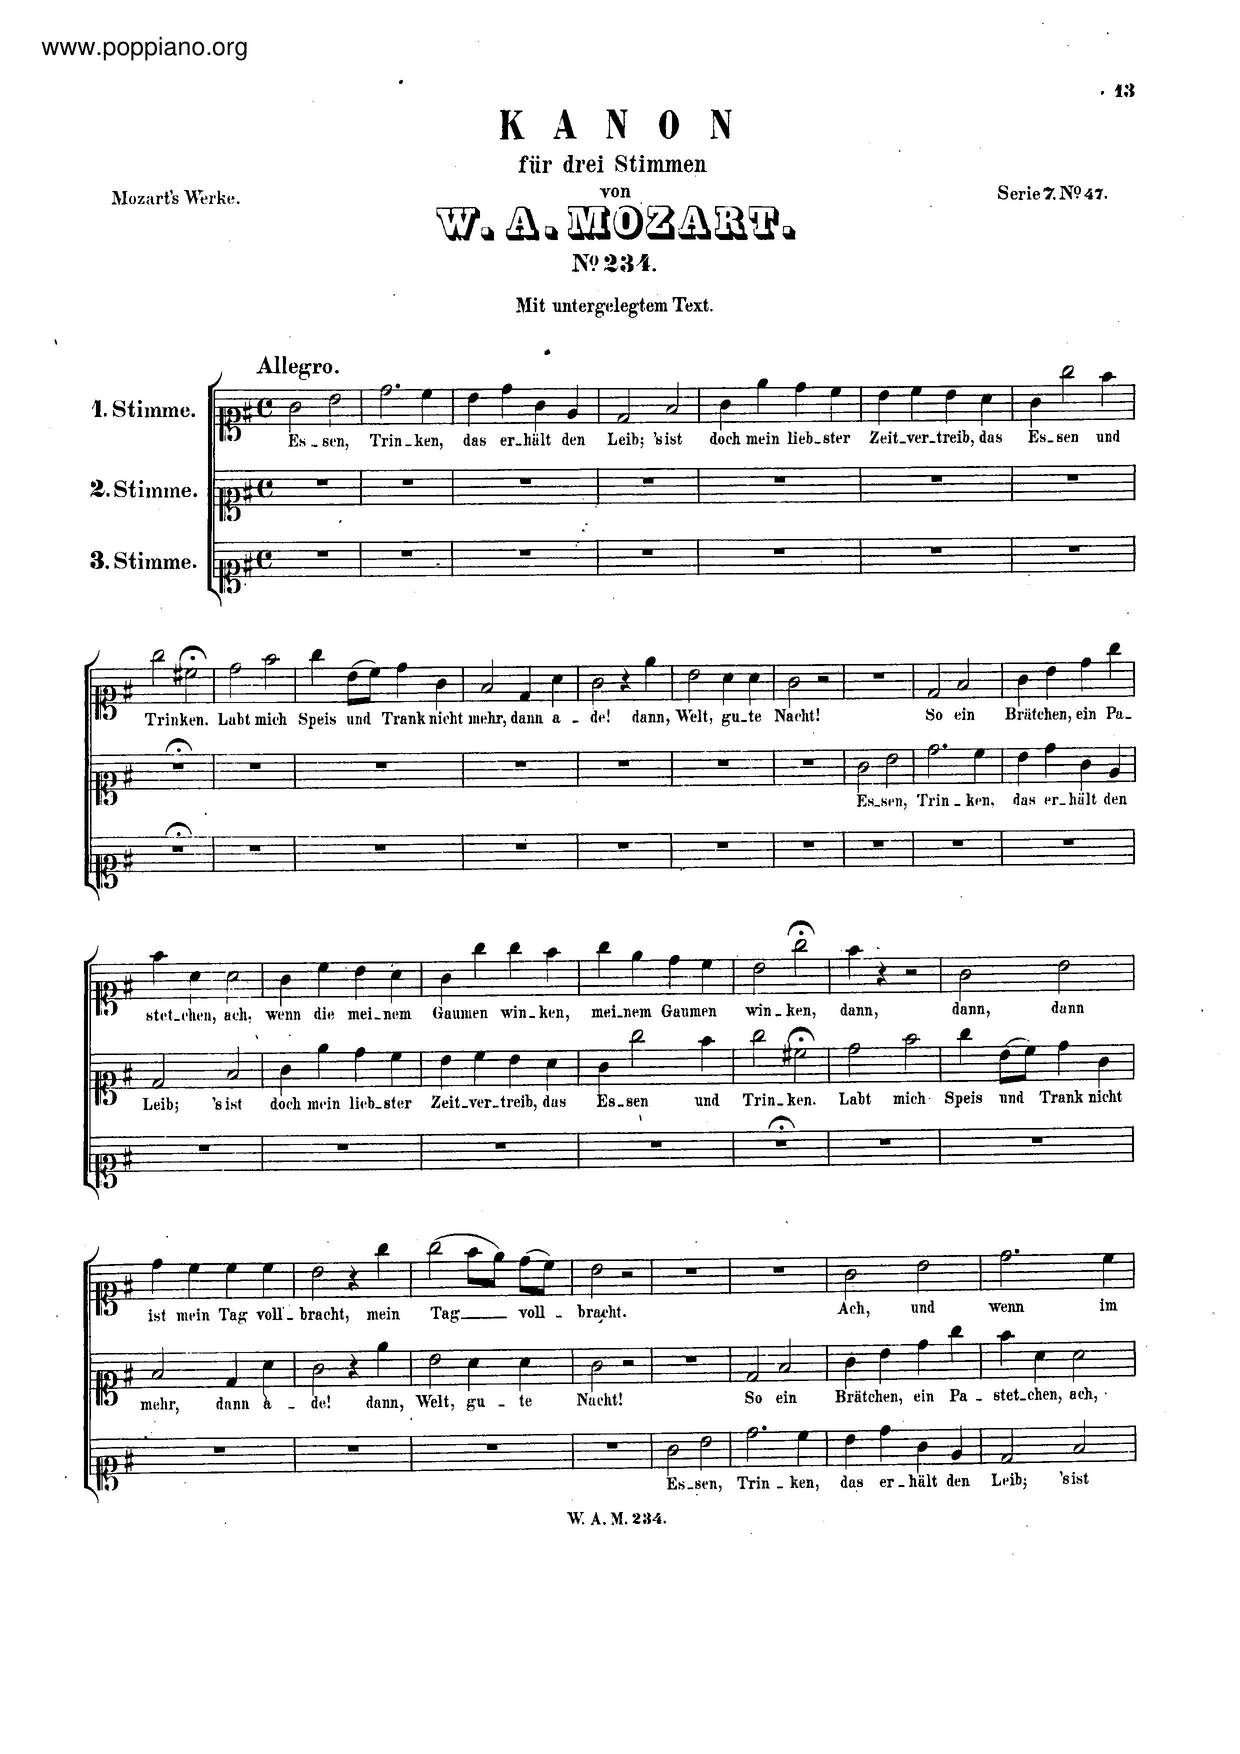 Canon For 3 Voices In G Major, K. 234/382E琴谱